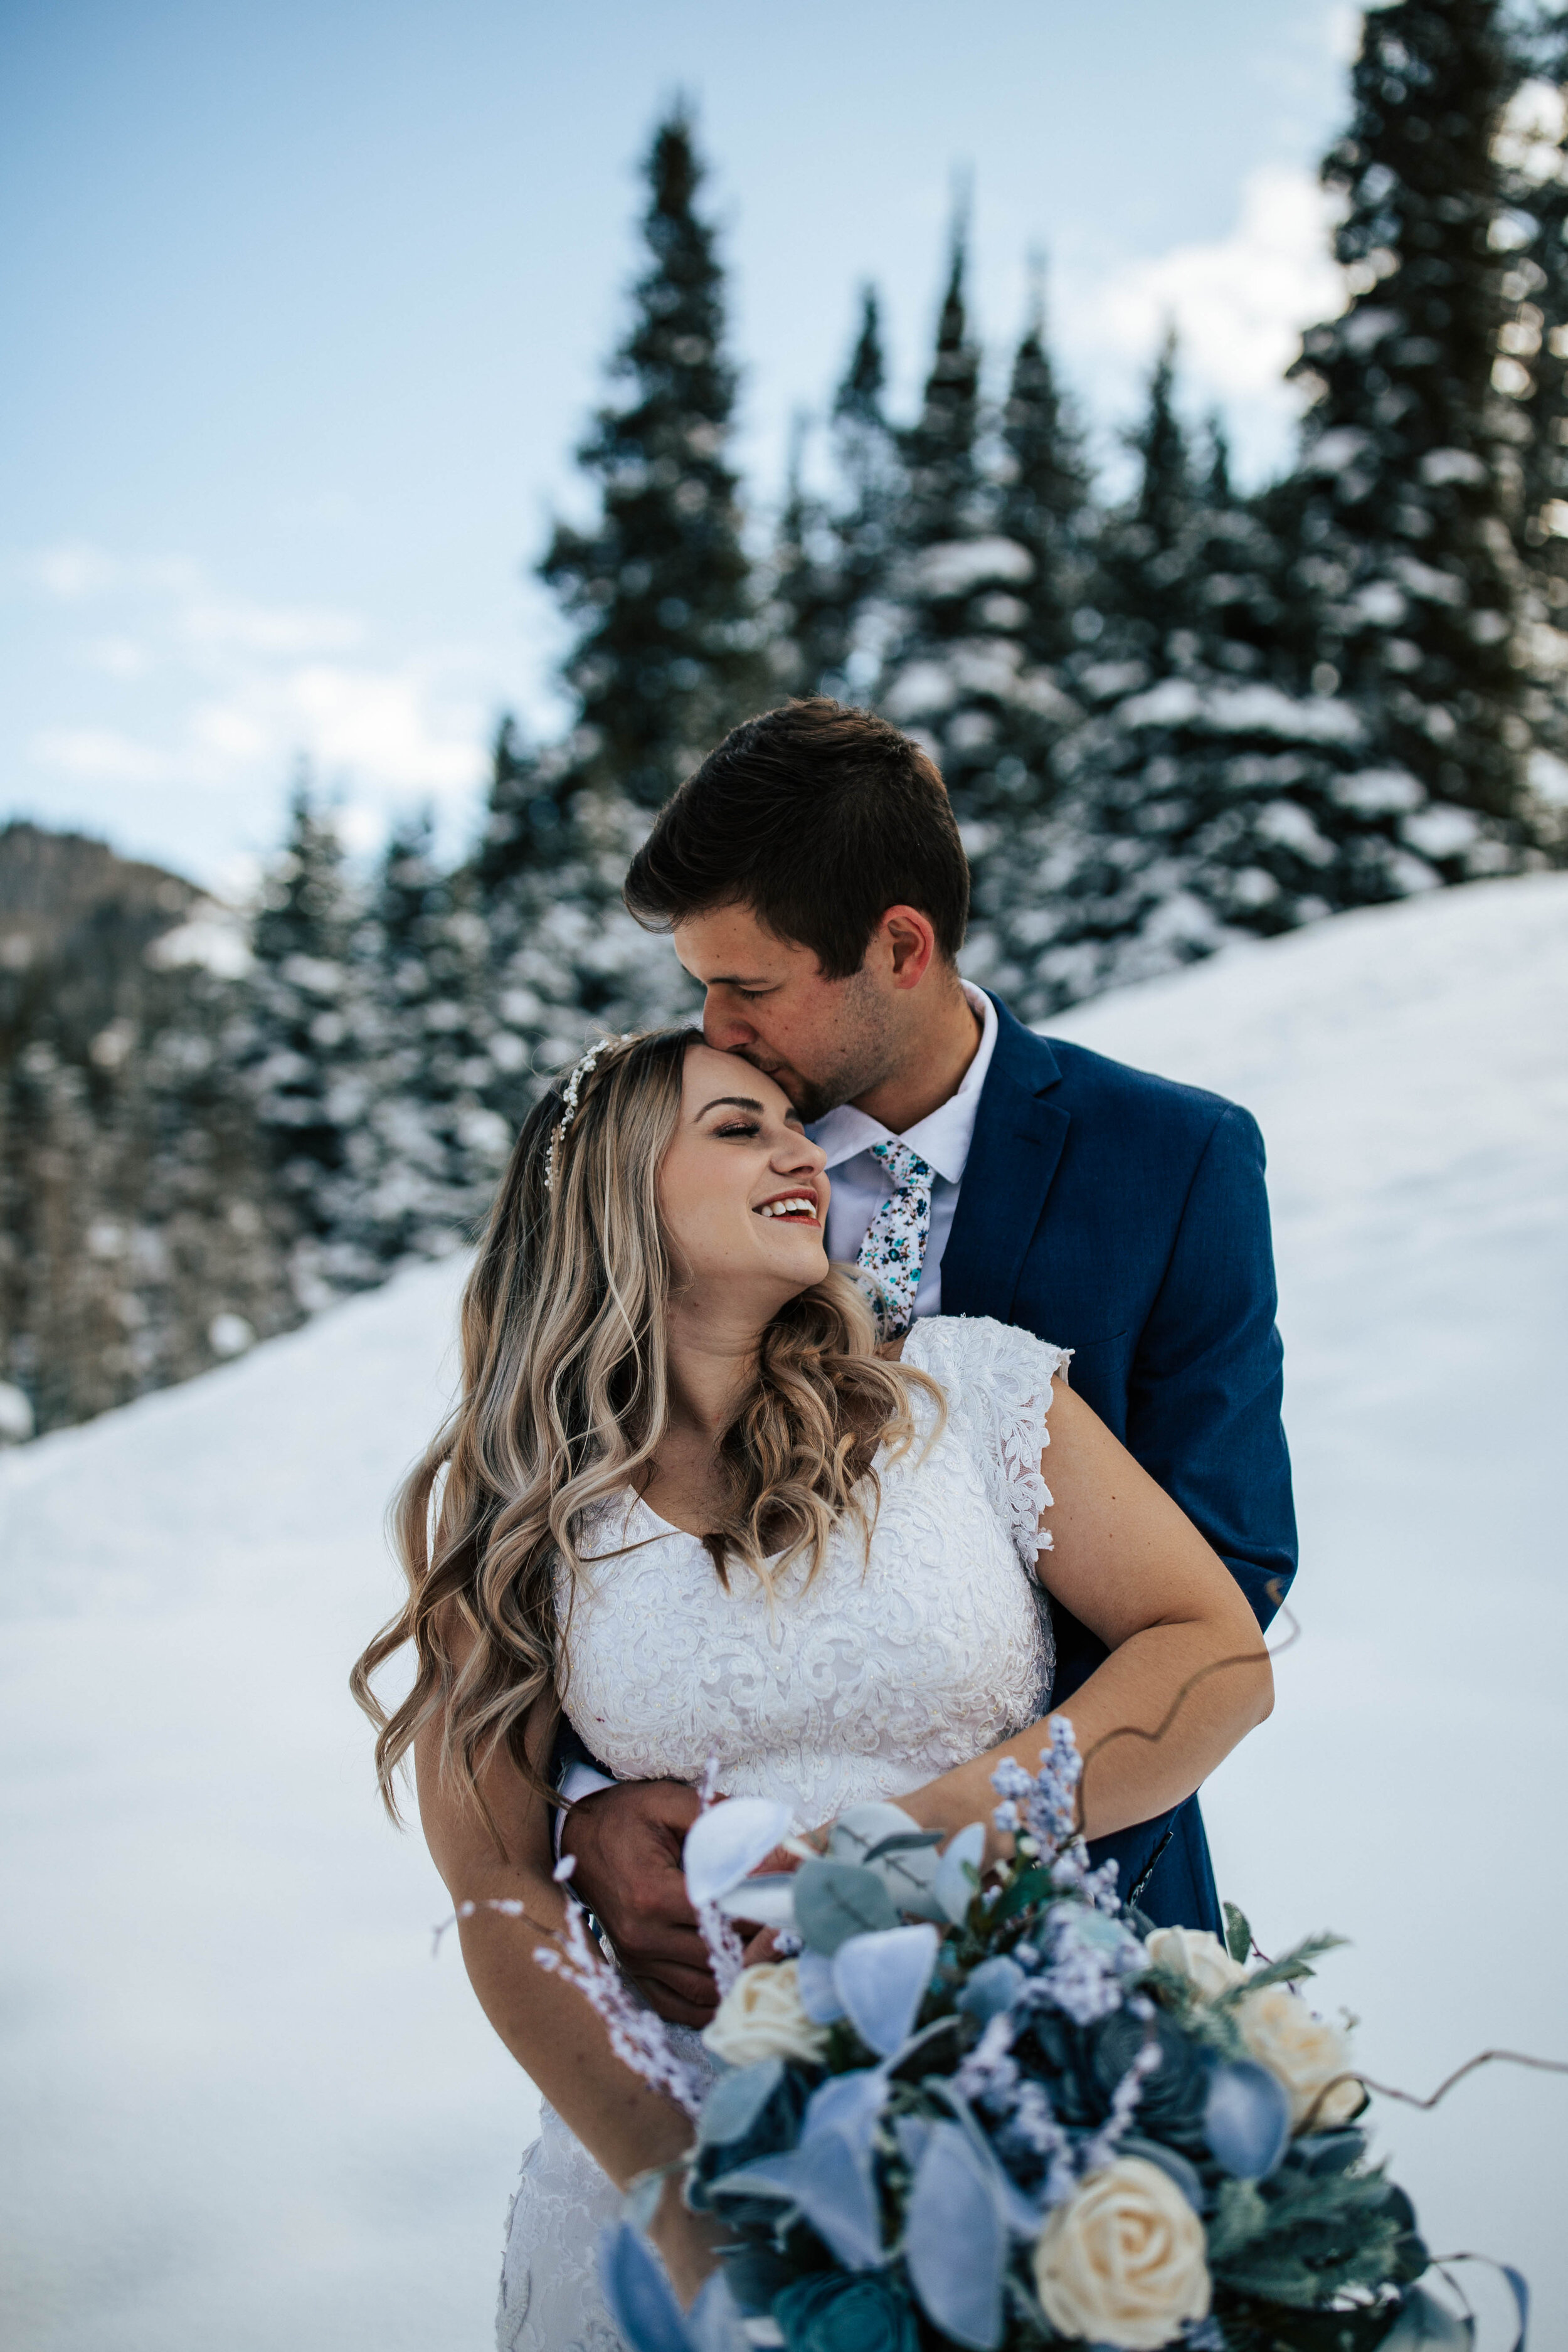 Wedding couple winter wedding bridals snow #winterwedding #weddingphotographer #bridals #bridalshoot #coupleshoot photoshoot blue bouquet